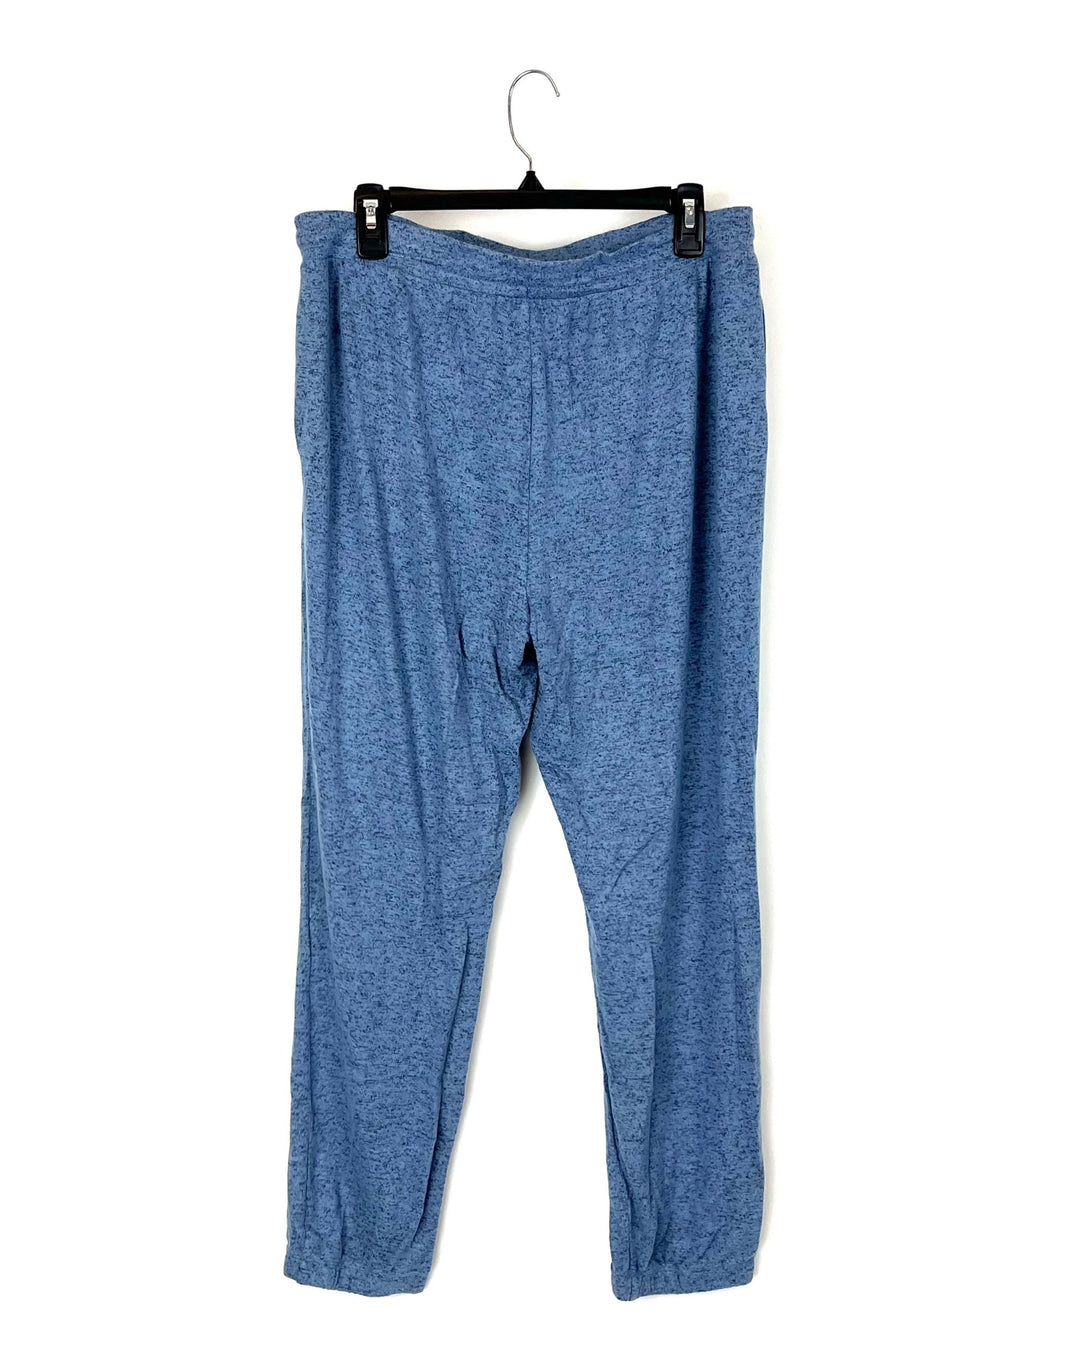 Blue Sleepwear / Lounge Pants - Size 1X